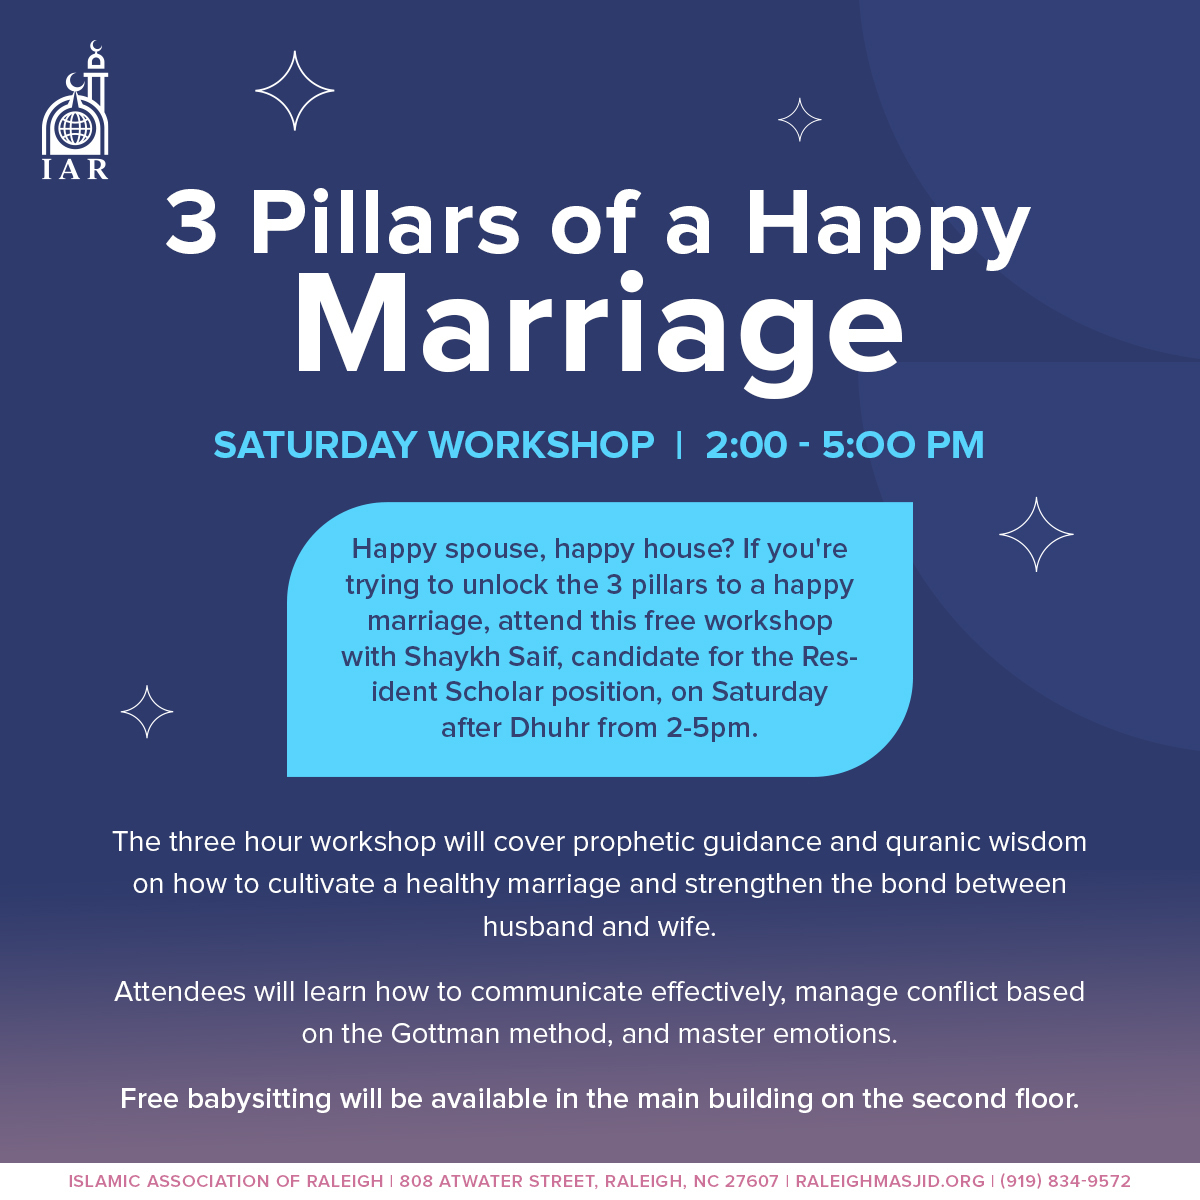 “3 Pillars of a Happy Marriage” Saturday Workshop with Shaykh Saif